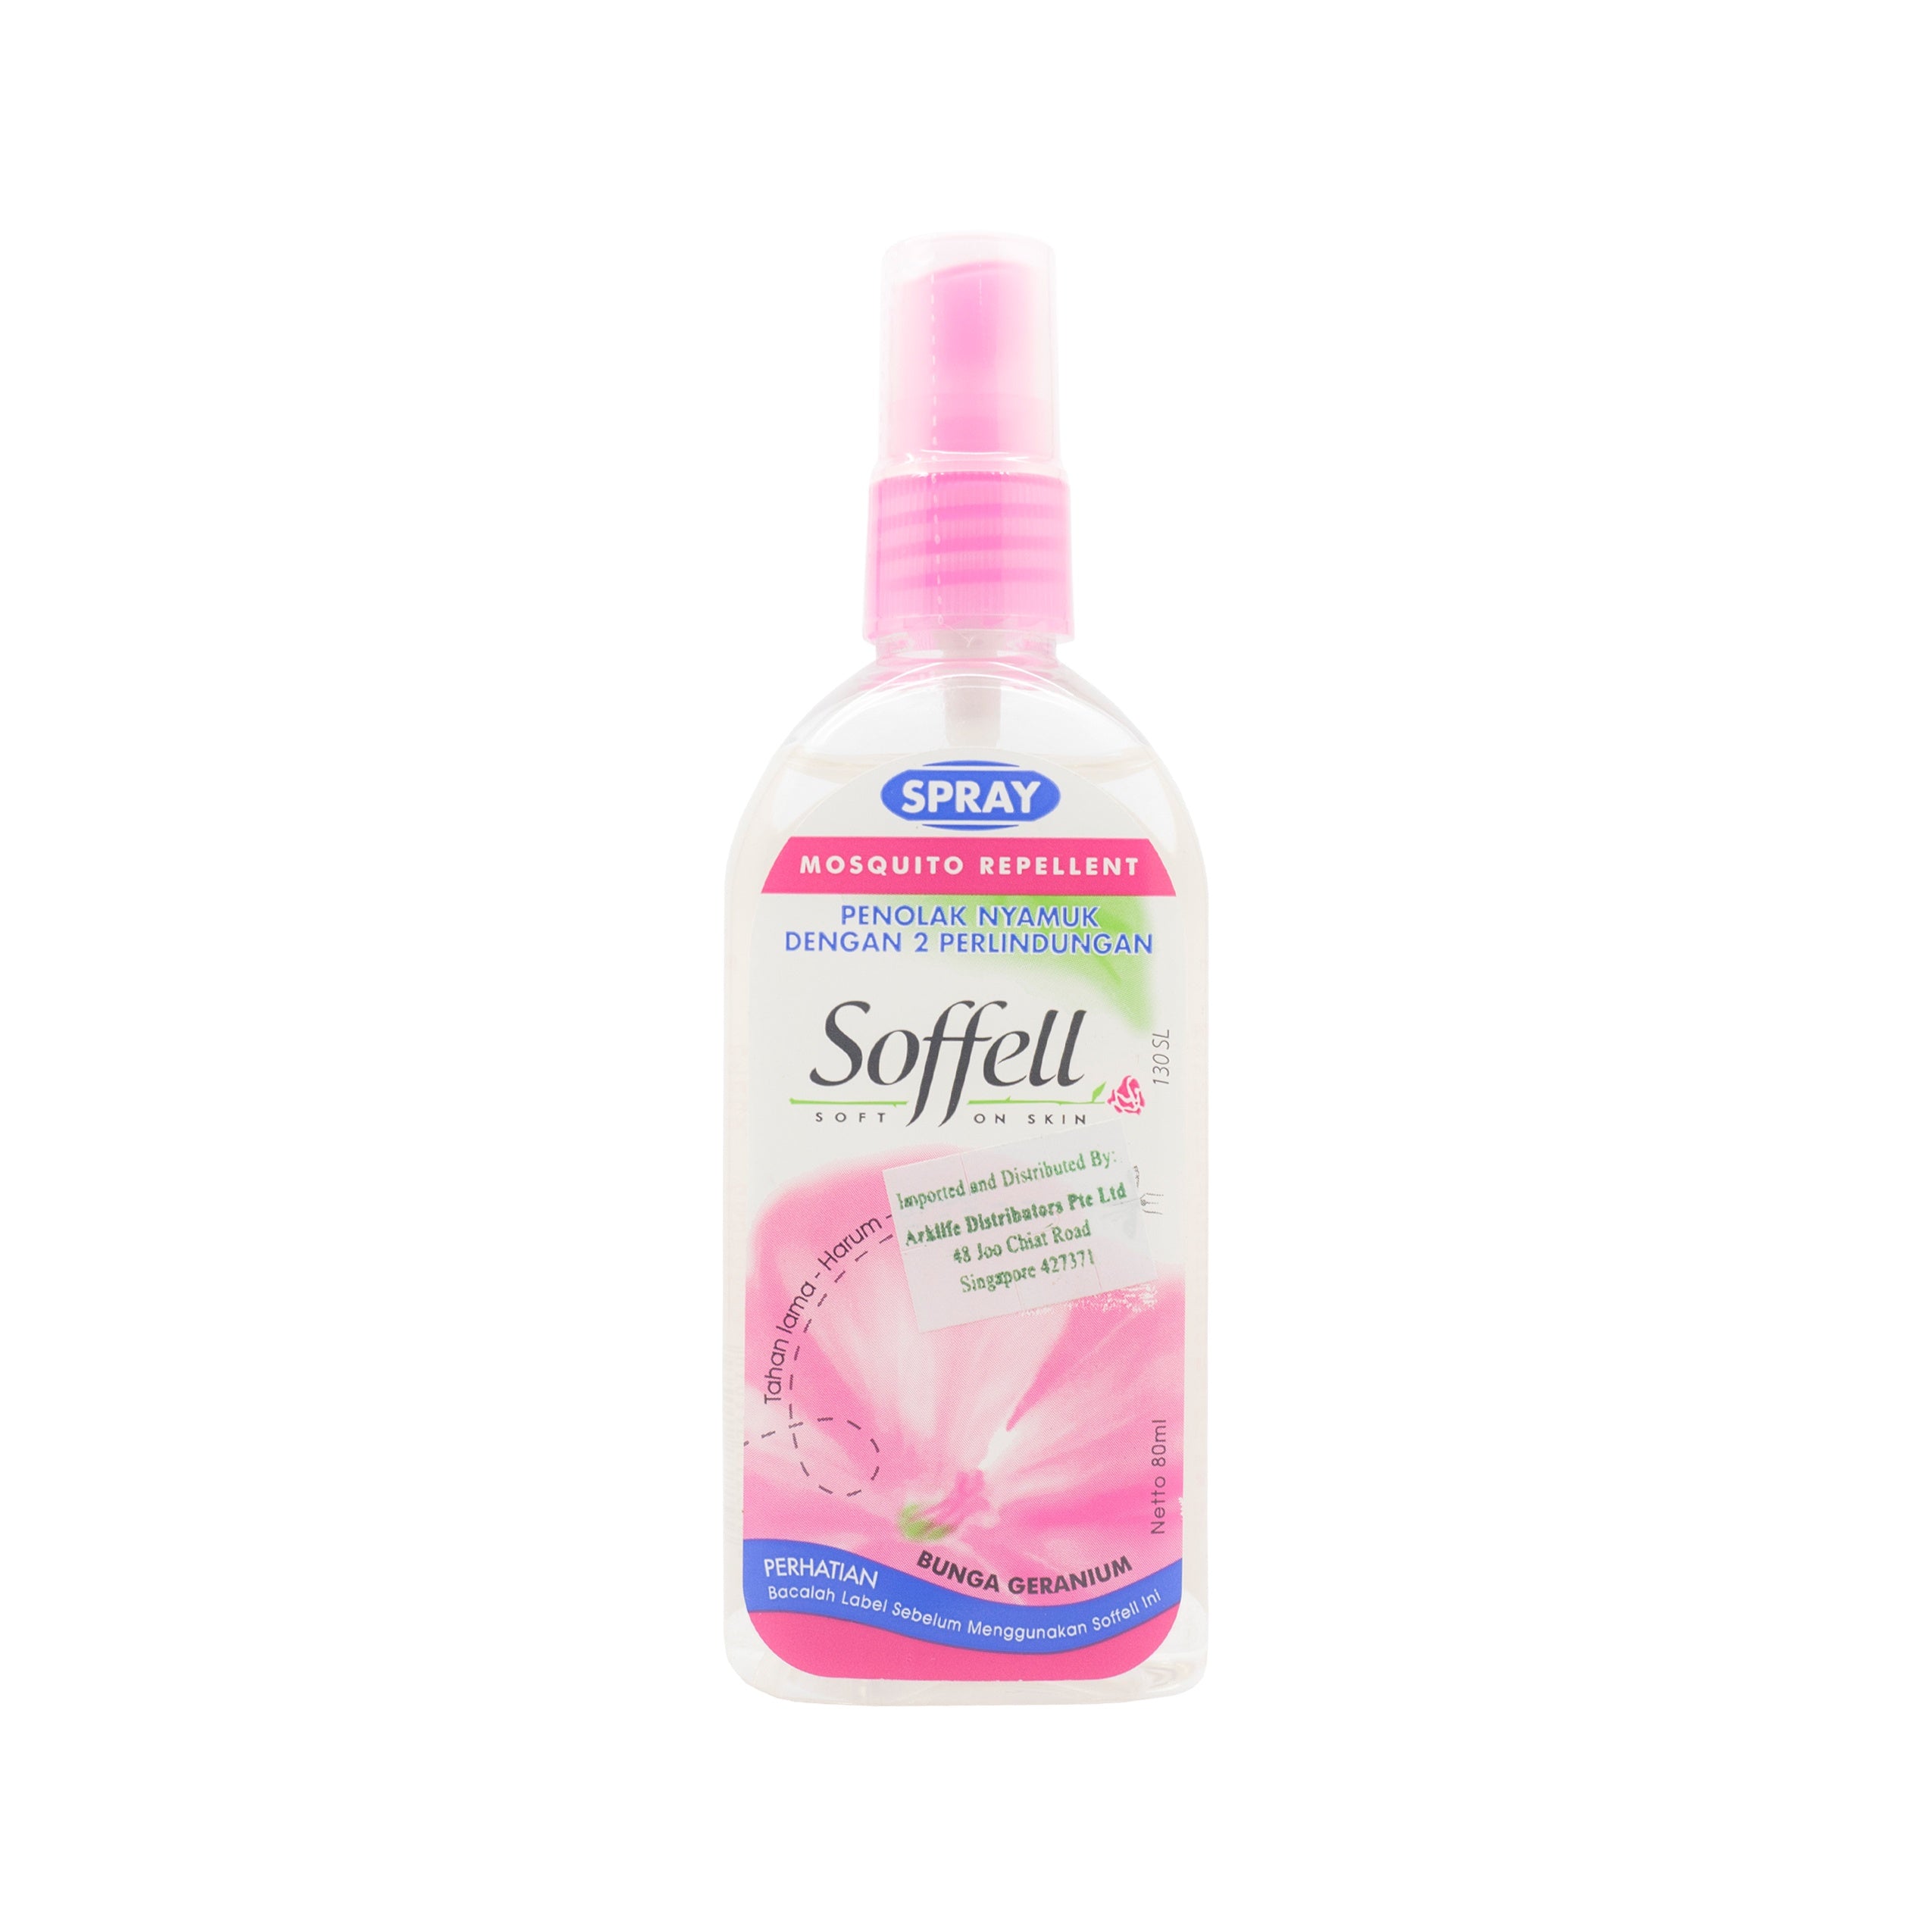 Soffell, Mosquito Repellent Spray, Bunga Geranium, 80 ml